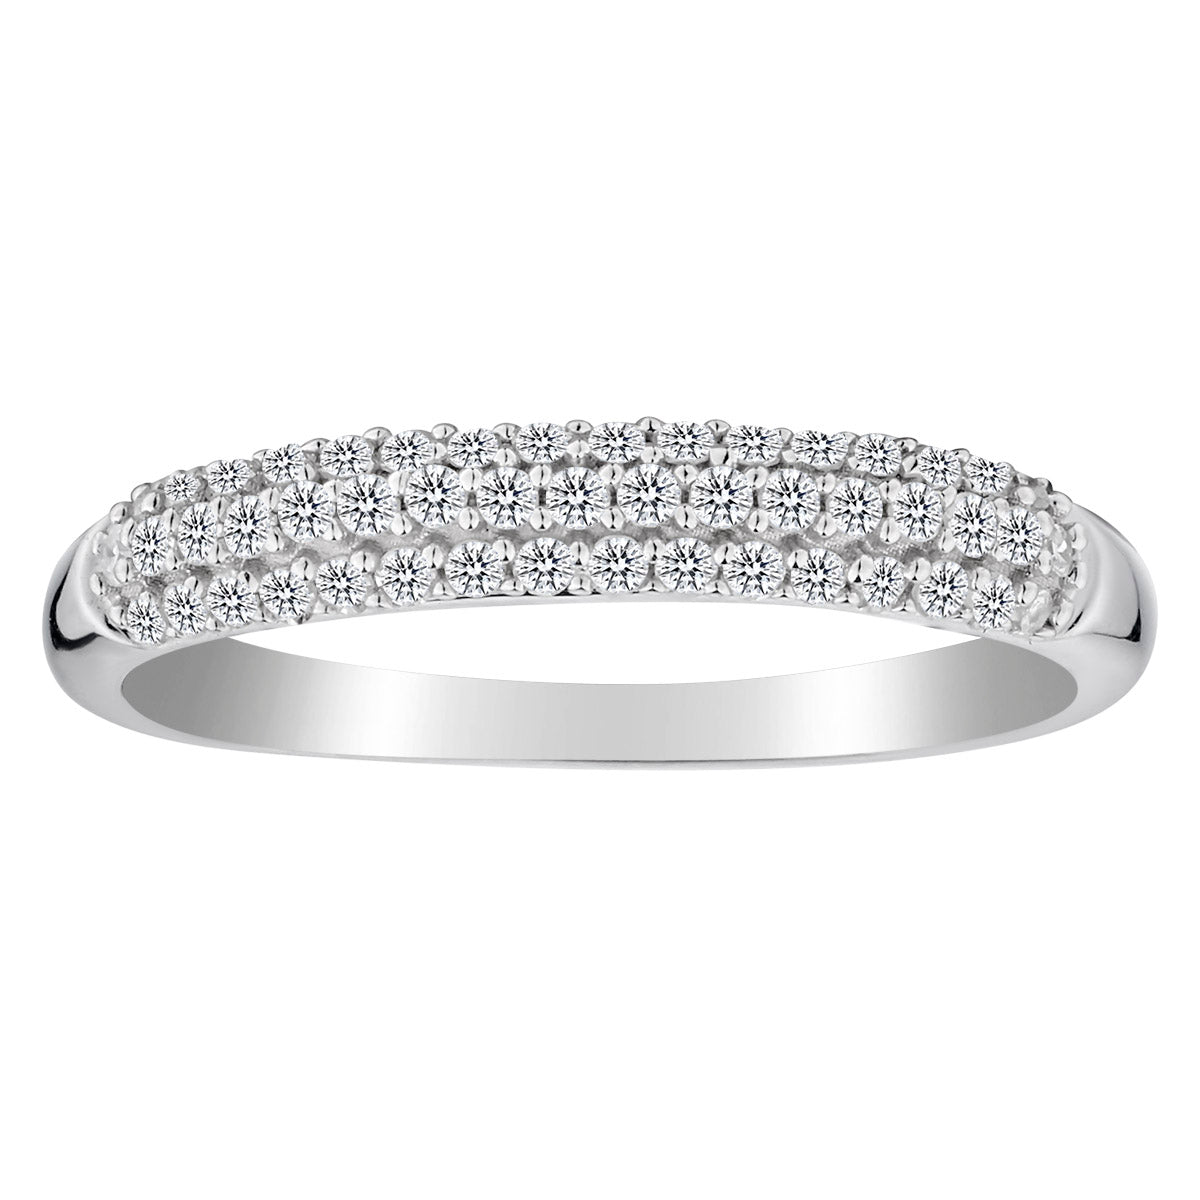 .25 Carat Diamond Ring, Silver......................NOW